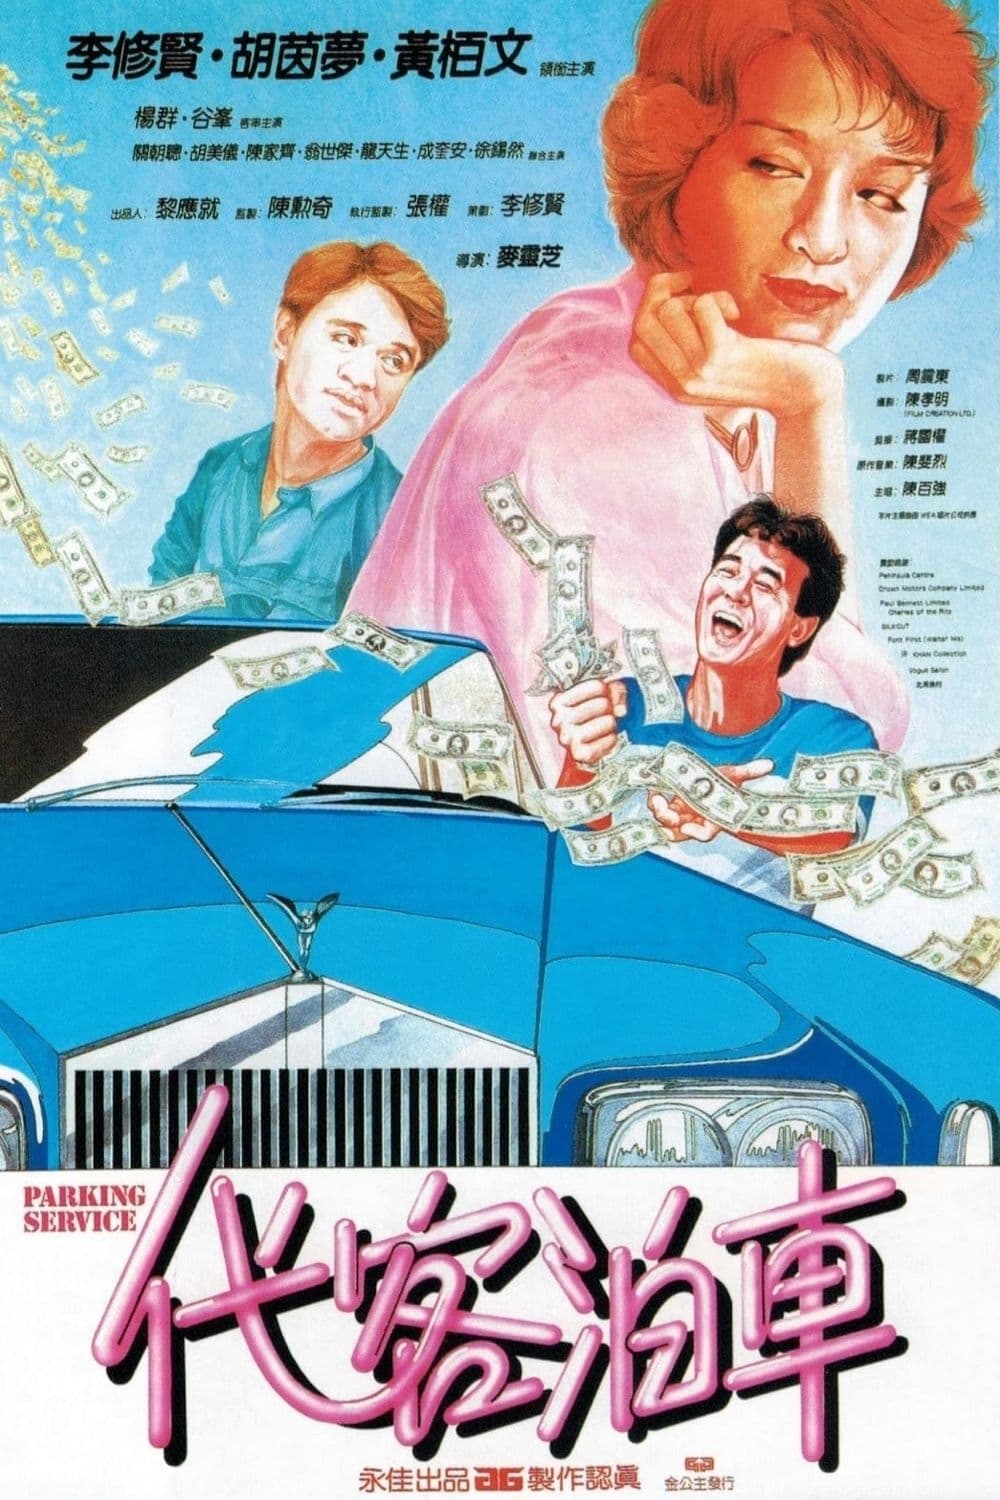 Parking Service (1986)